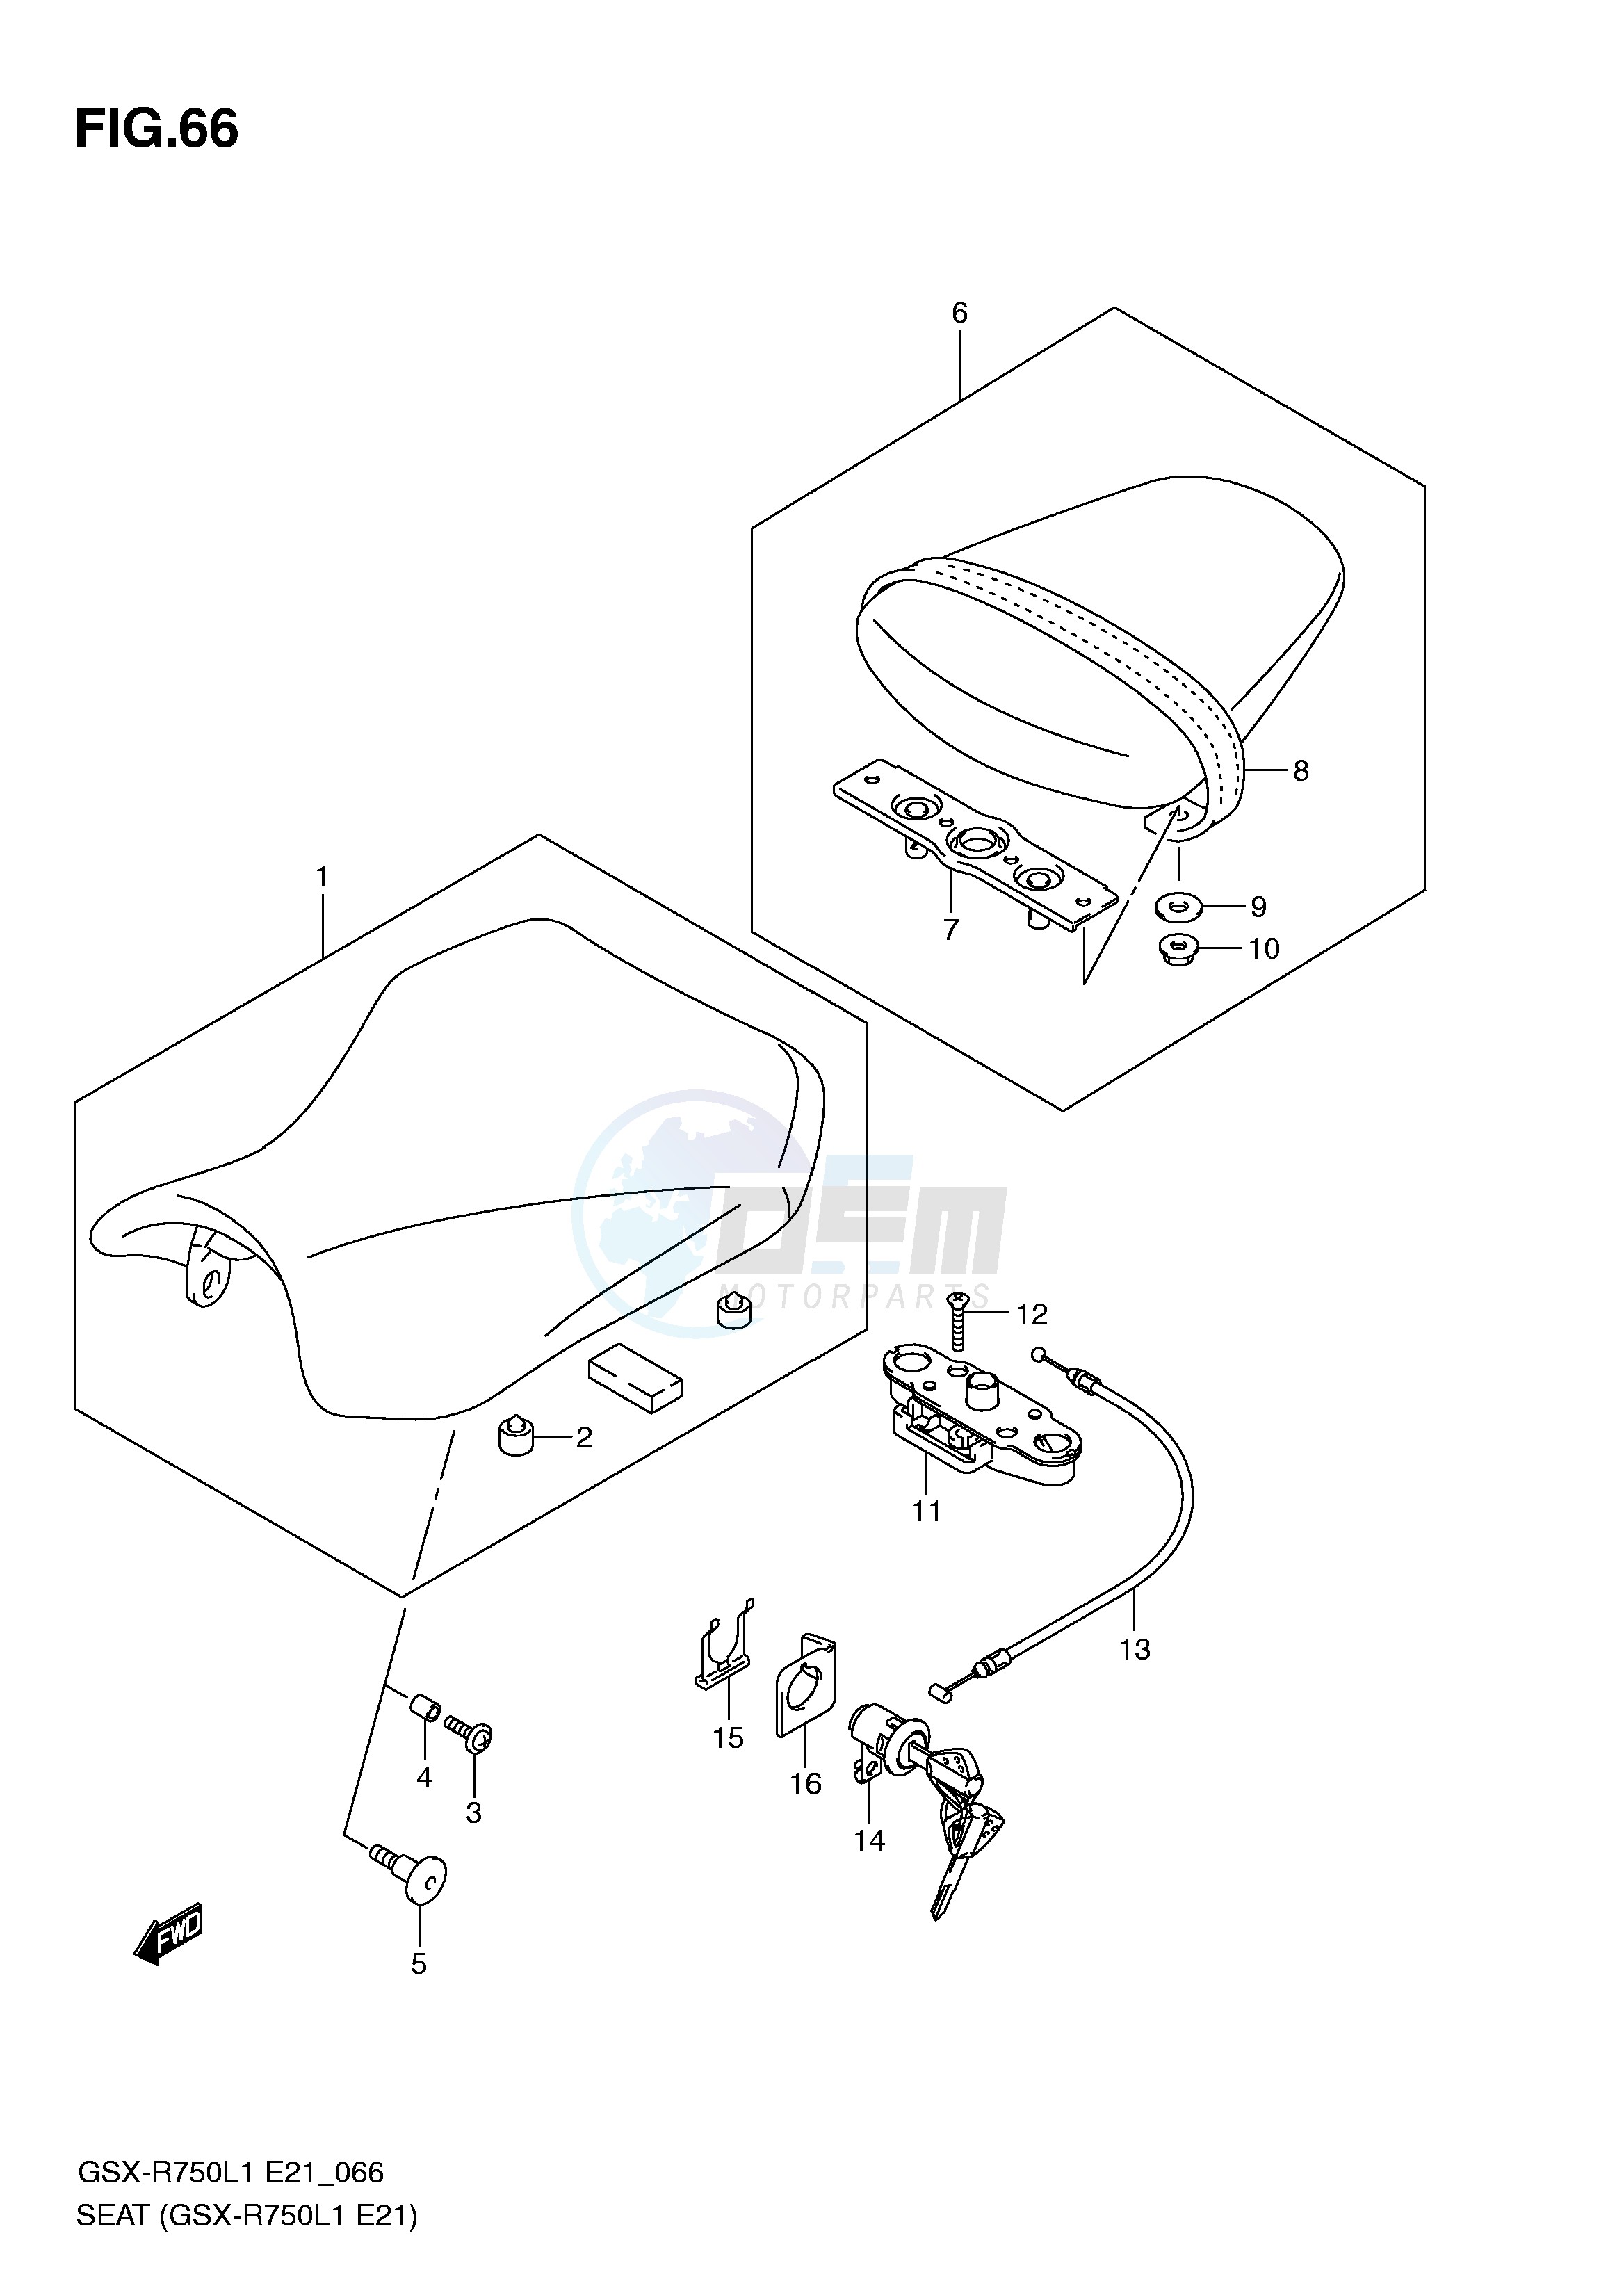 SEAT (GSX-R750L1 E21) blueprint